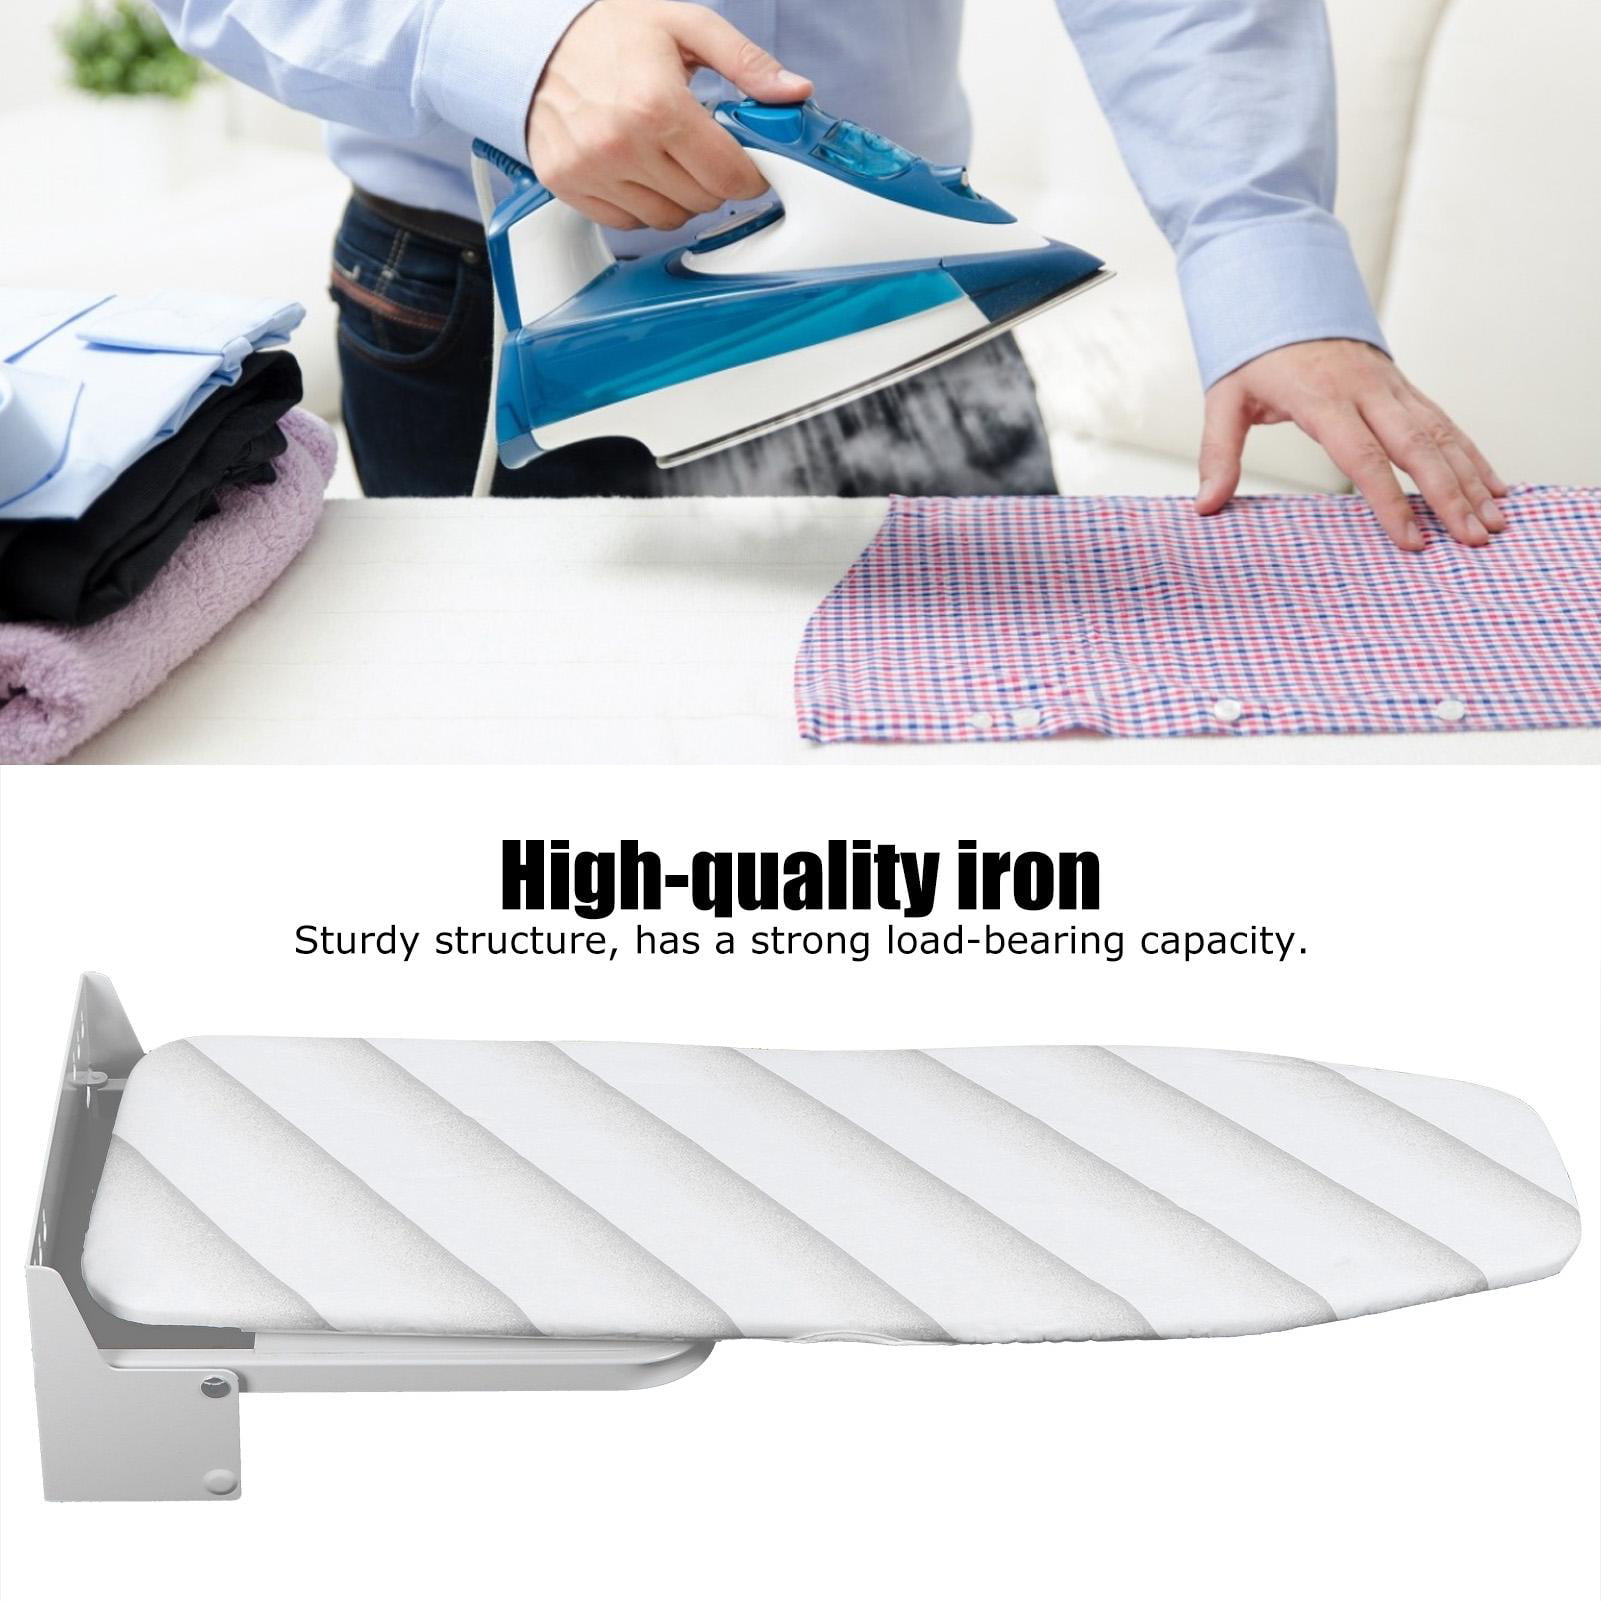 Nisorpa Wall Mounted Ironing Board Fold-up Laundry Ironing Board with Ironing Board Cover Folding Househeld Iron Board Space Saving